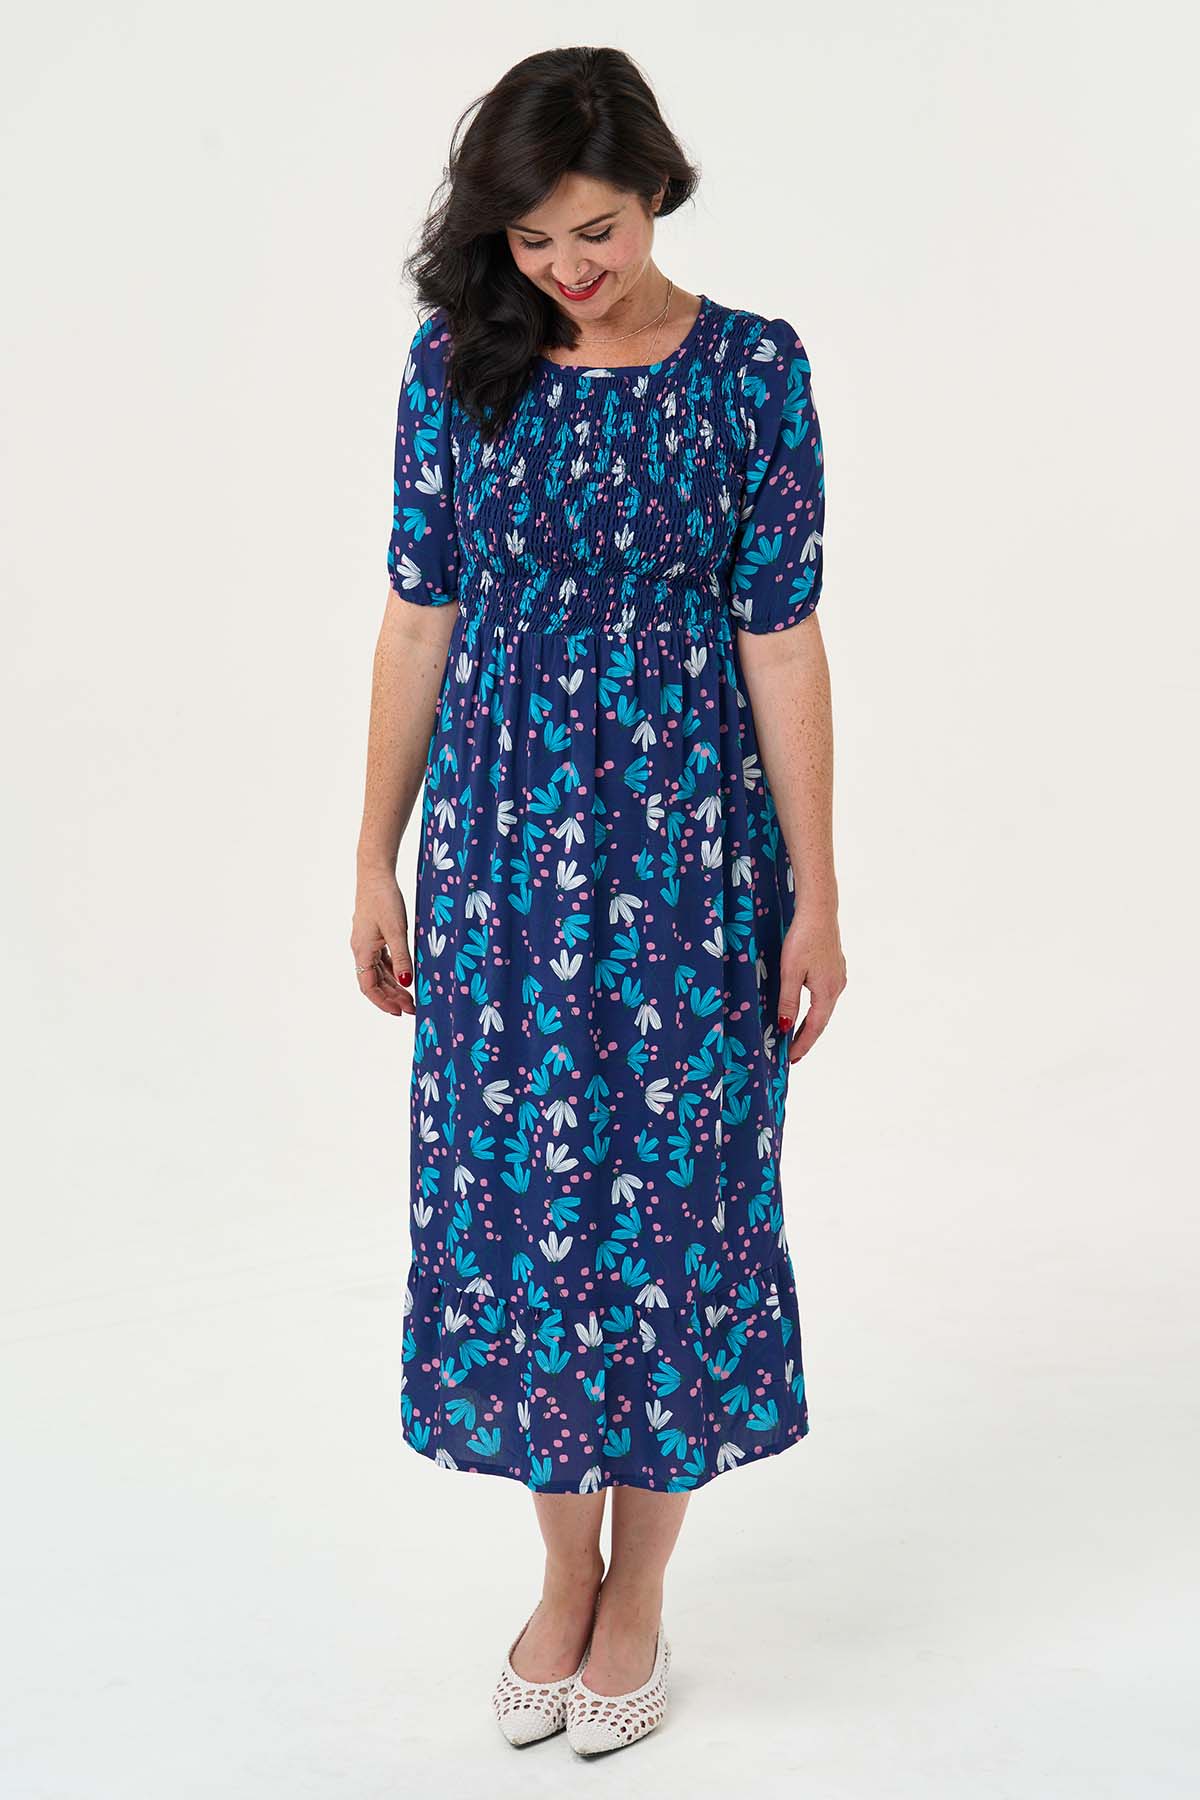 Sew Over It - Stitch School Cassie Dress